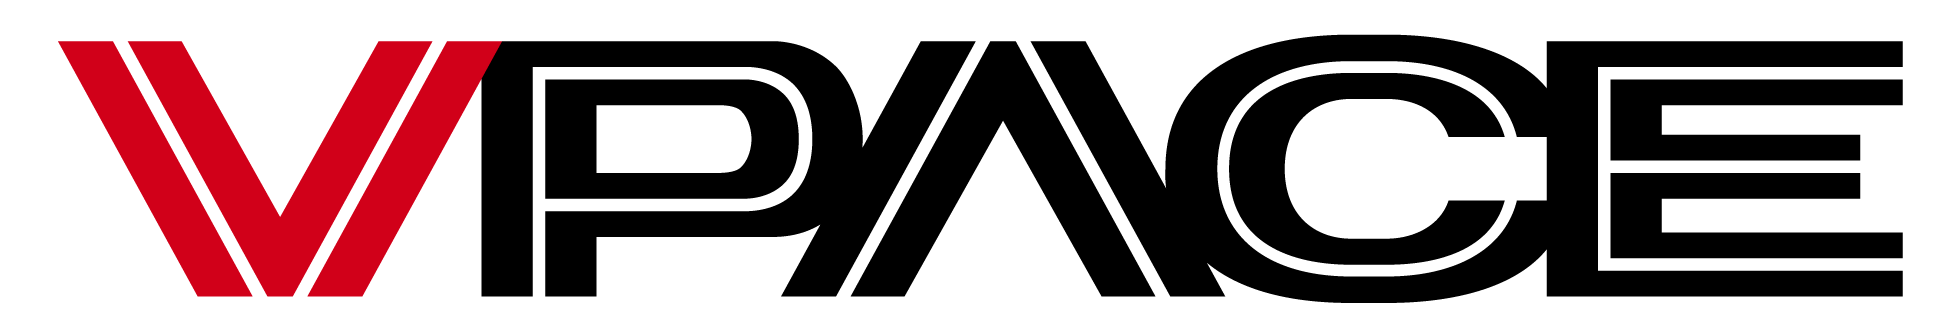 VPACE-Logo-redV